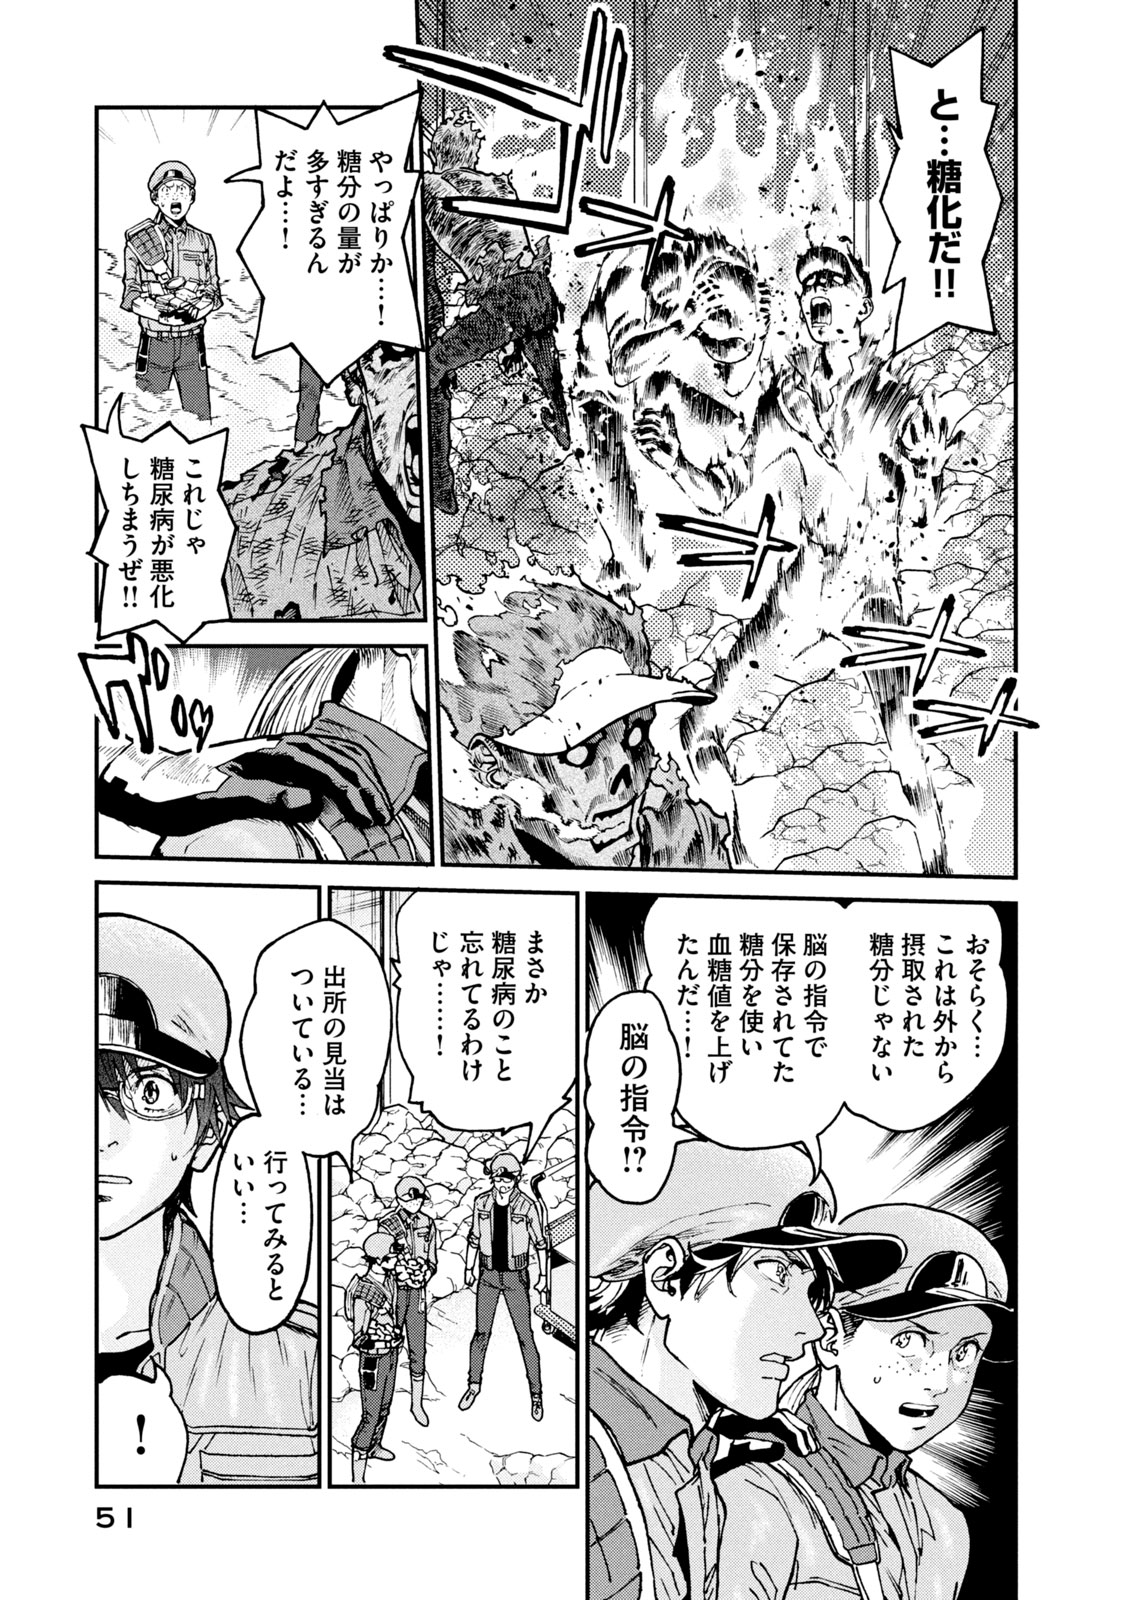 Hataraku Saibou BLACK - Chapter 33 - Page 19